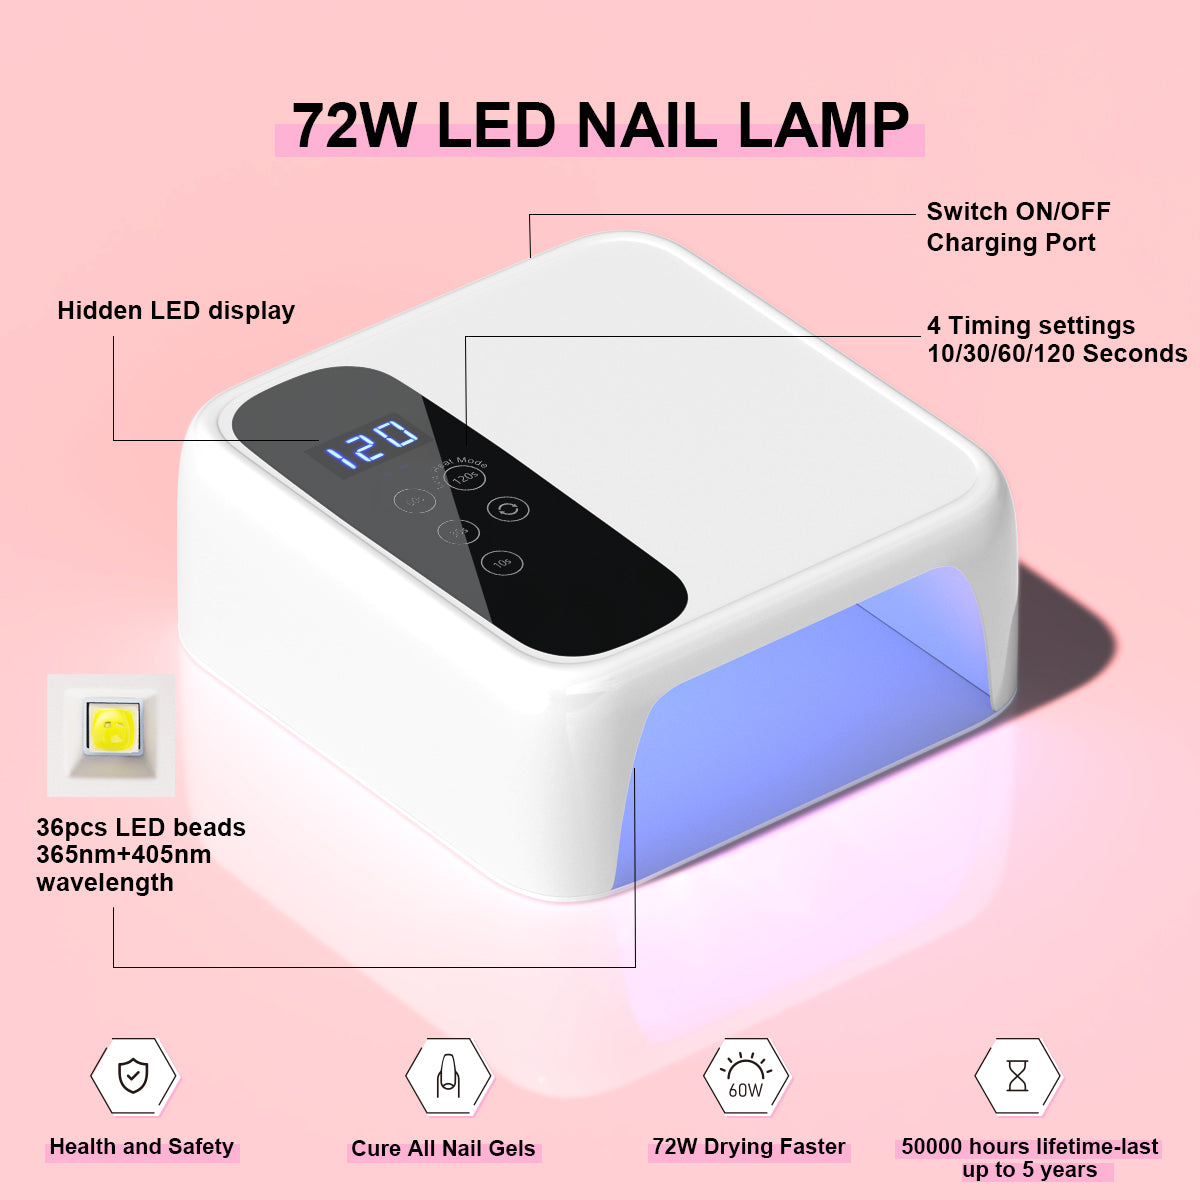 Gel Nail Polish Kit with UV Light – BETENAIL